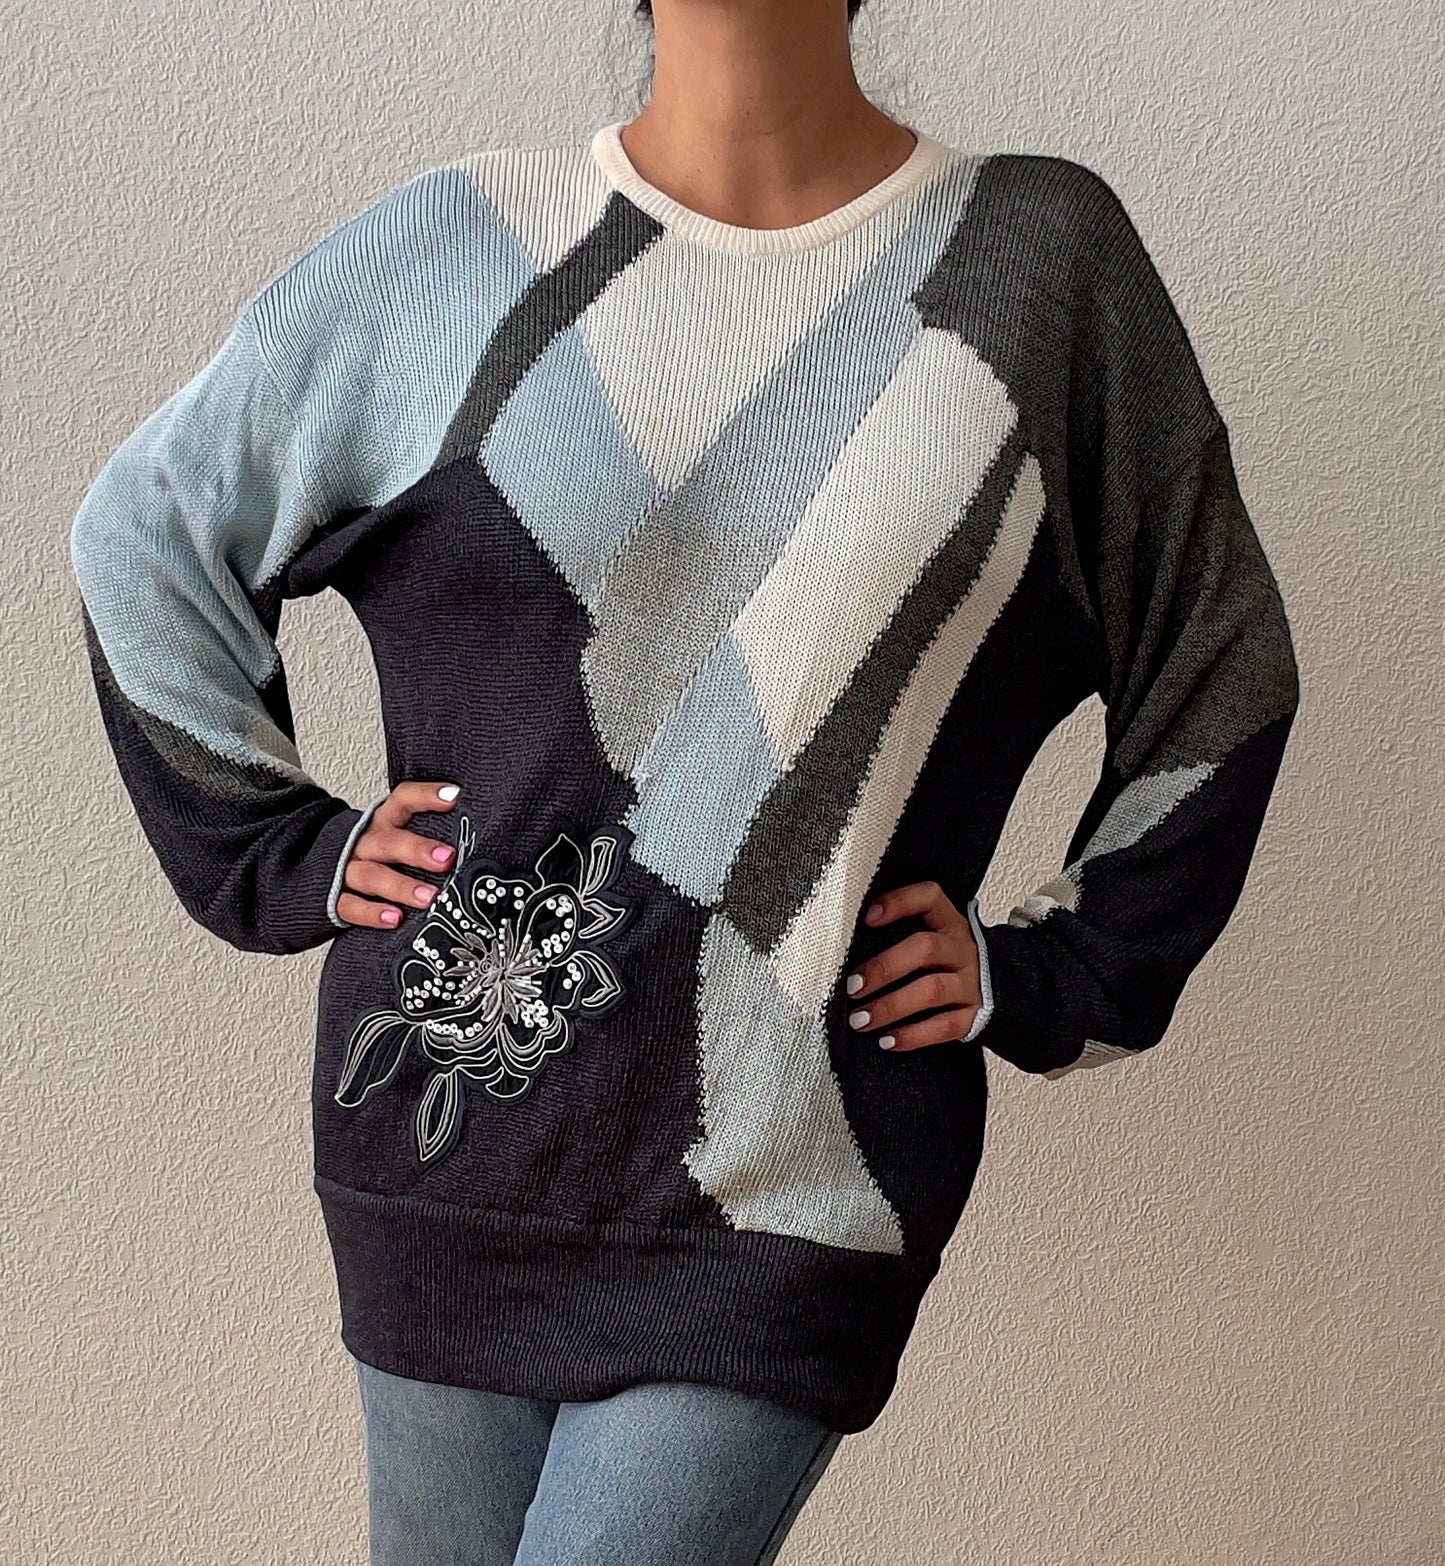 Vintage Escada by Margaretha Ley Linen blend Sweater - Pullover